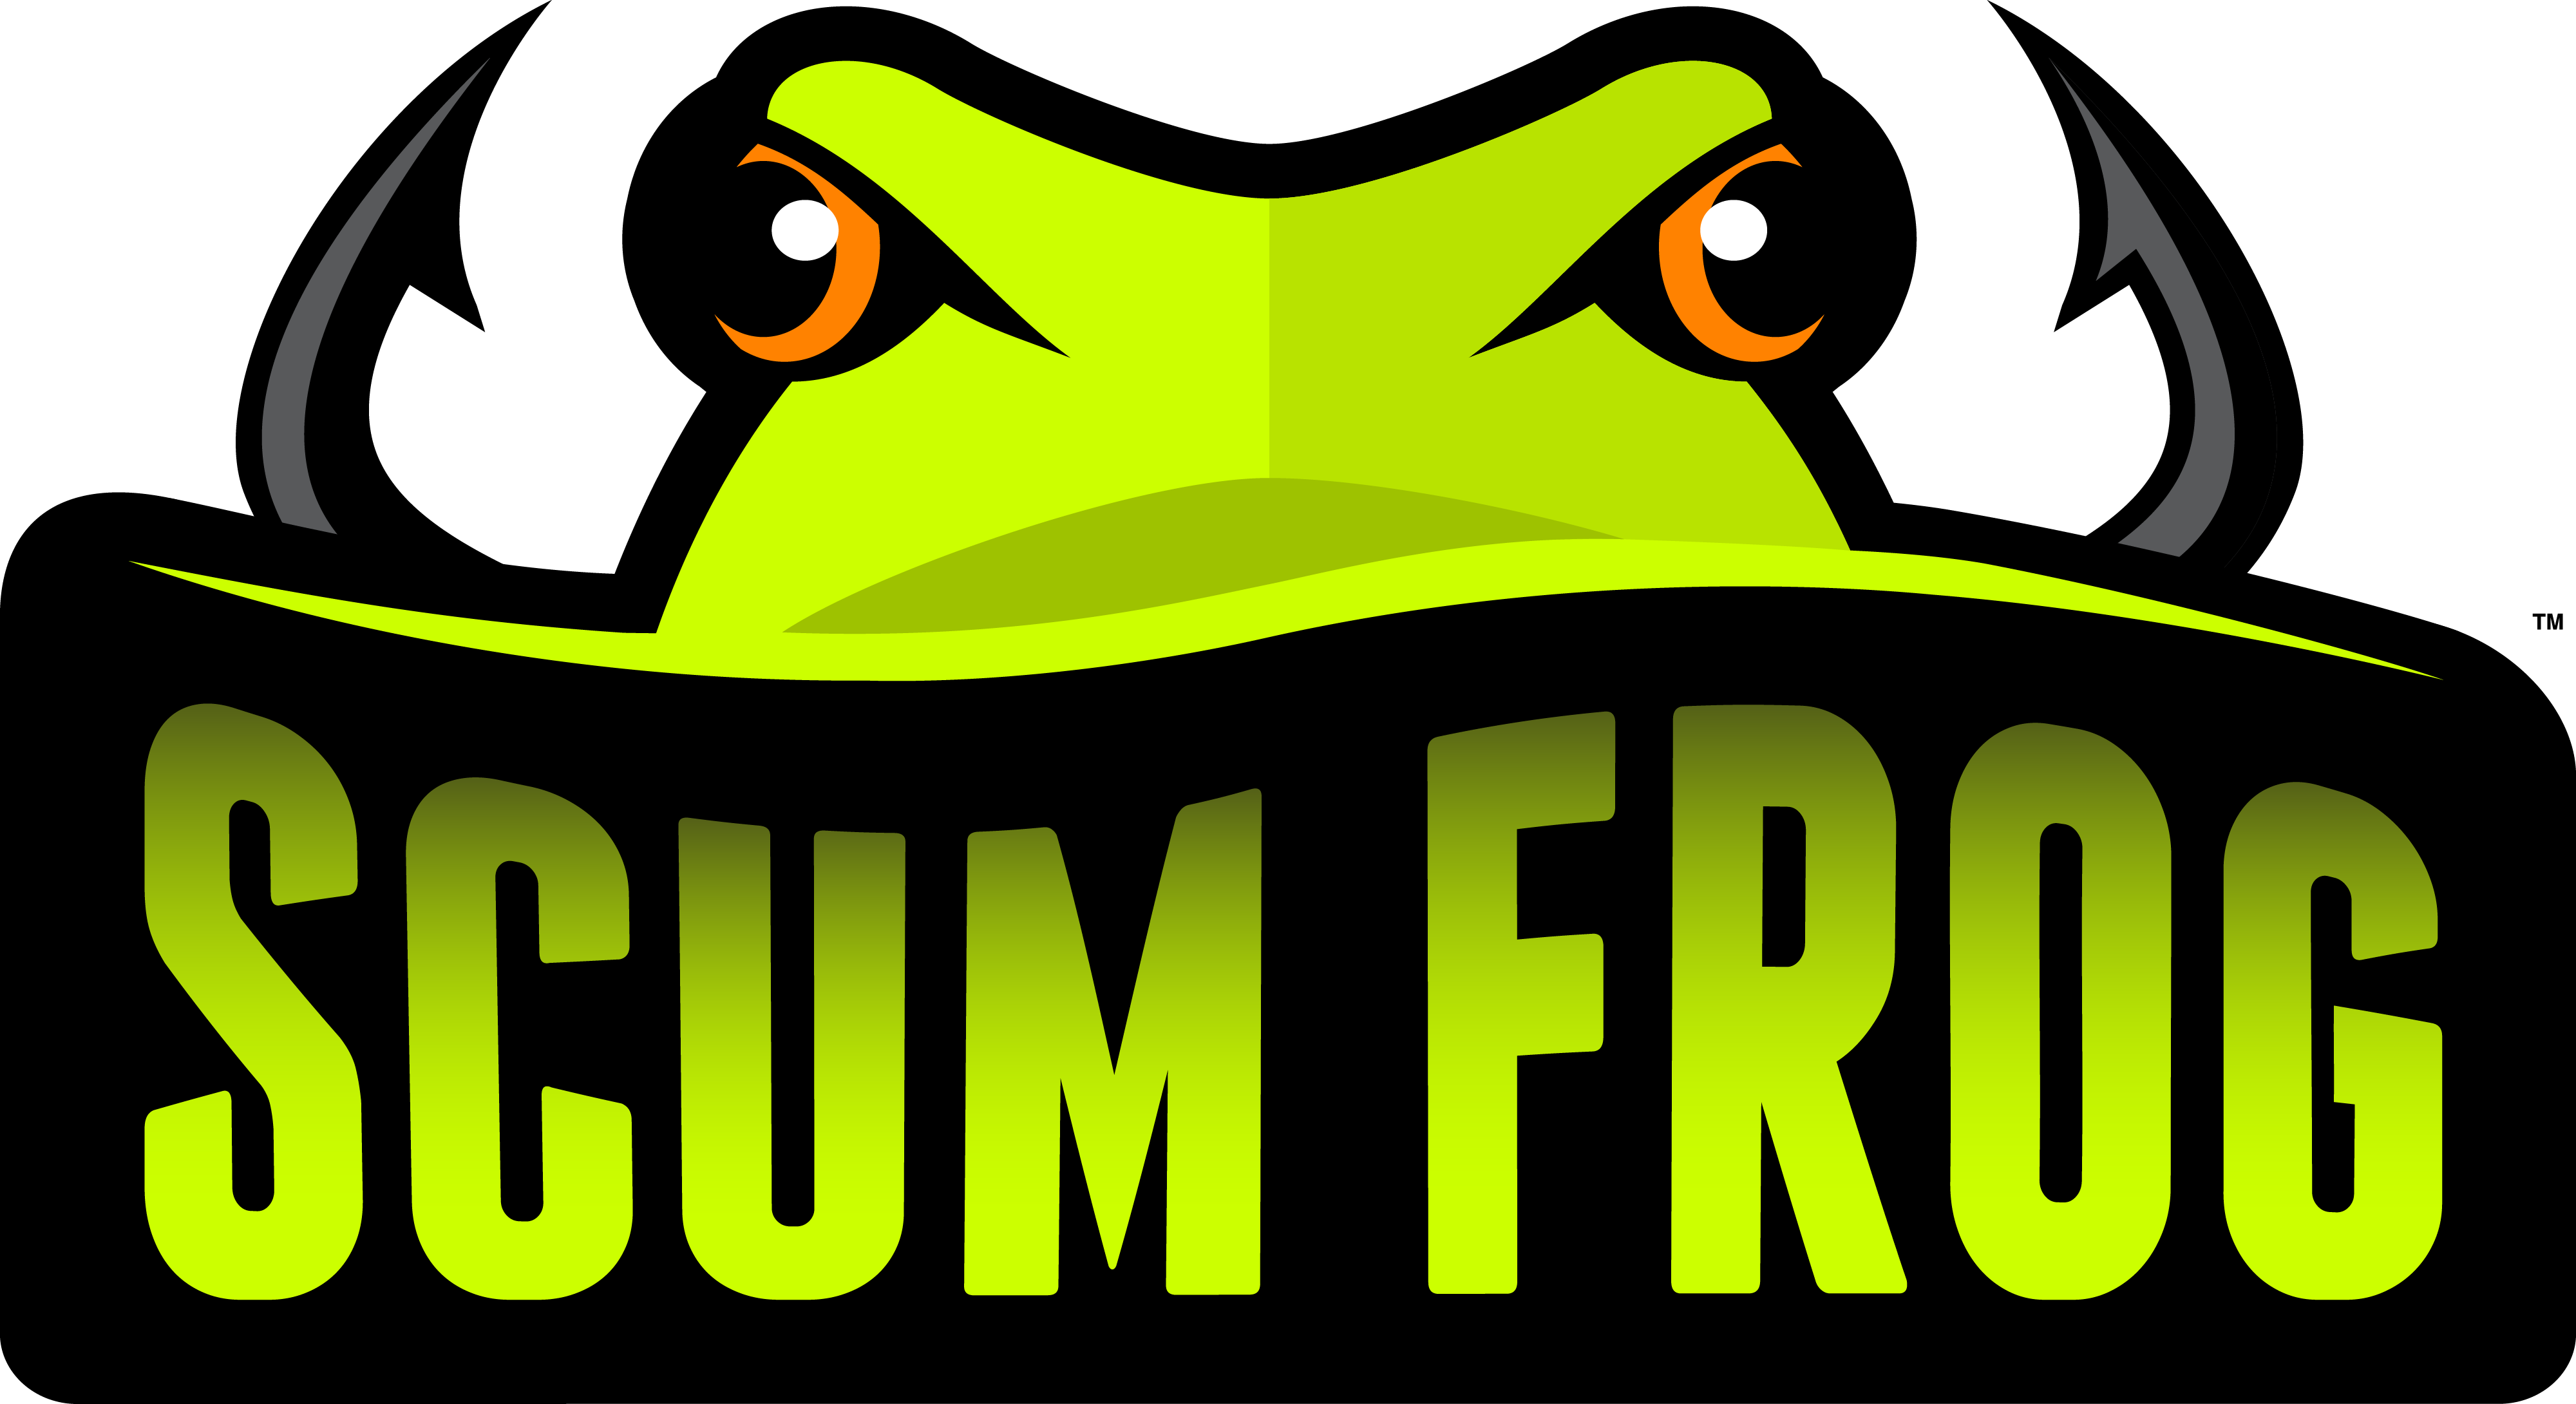 Scum Frog Big Foot, 2.5 (6.35cm), 10.5g